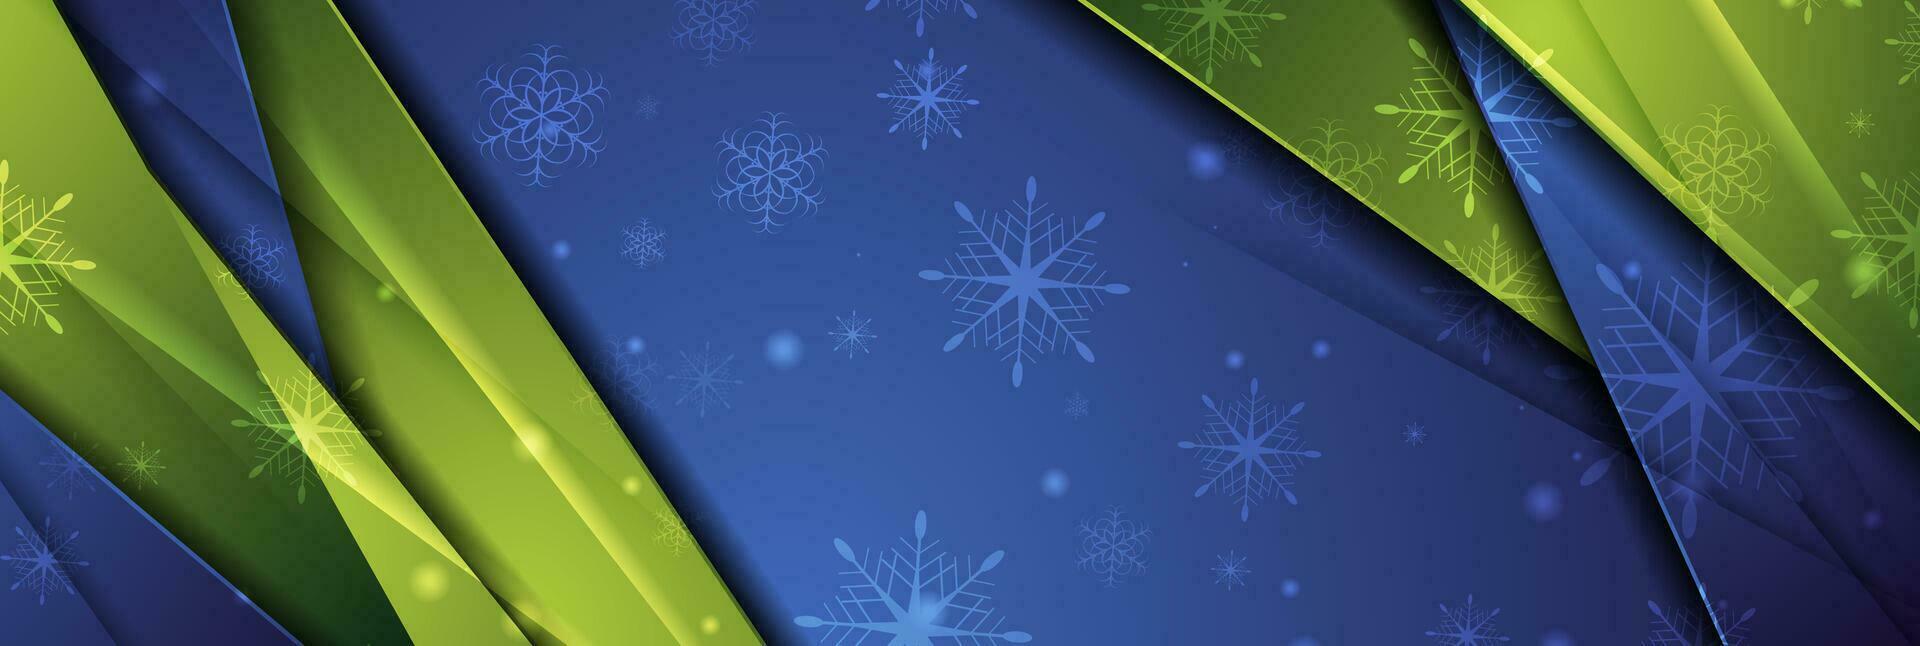 verde azul lustroso Natal e Novo ano fundo vetor